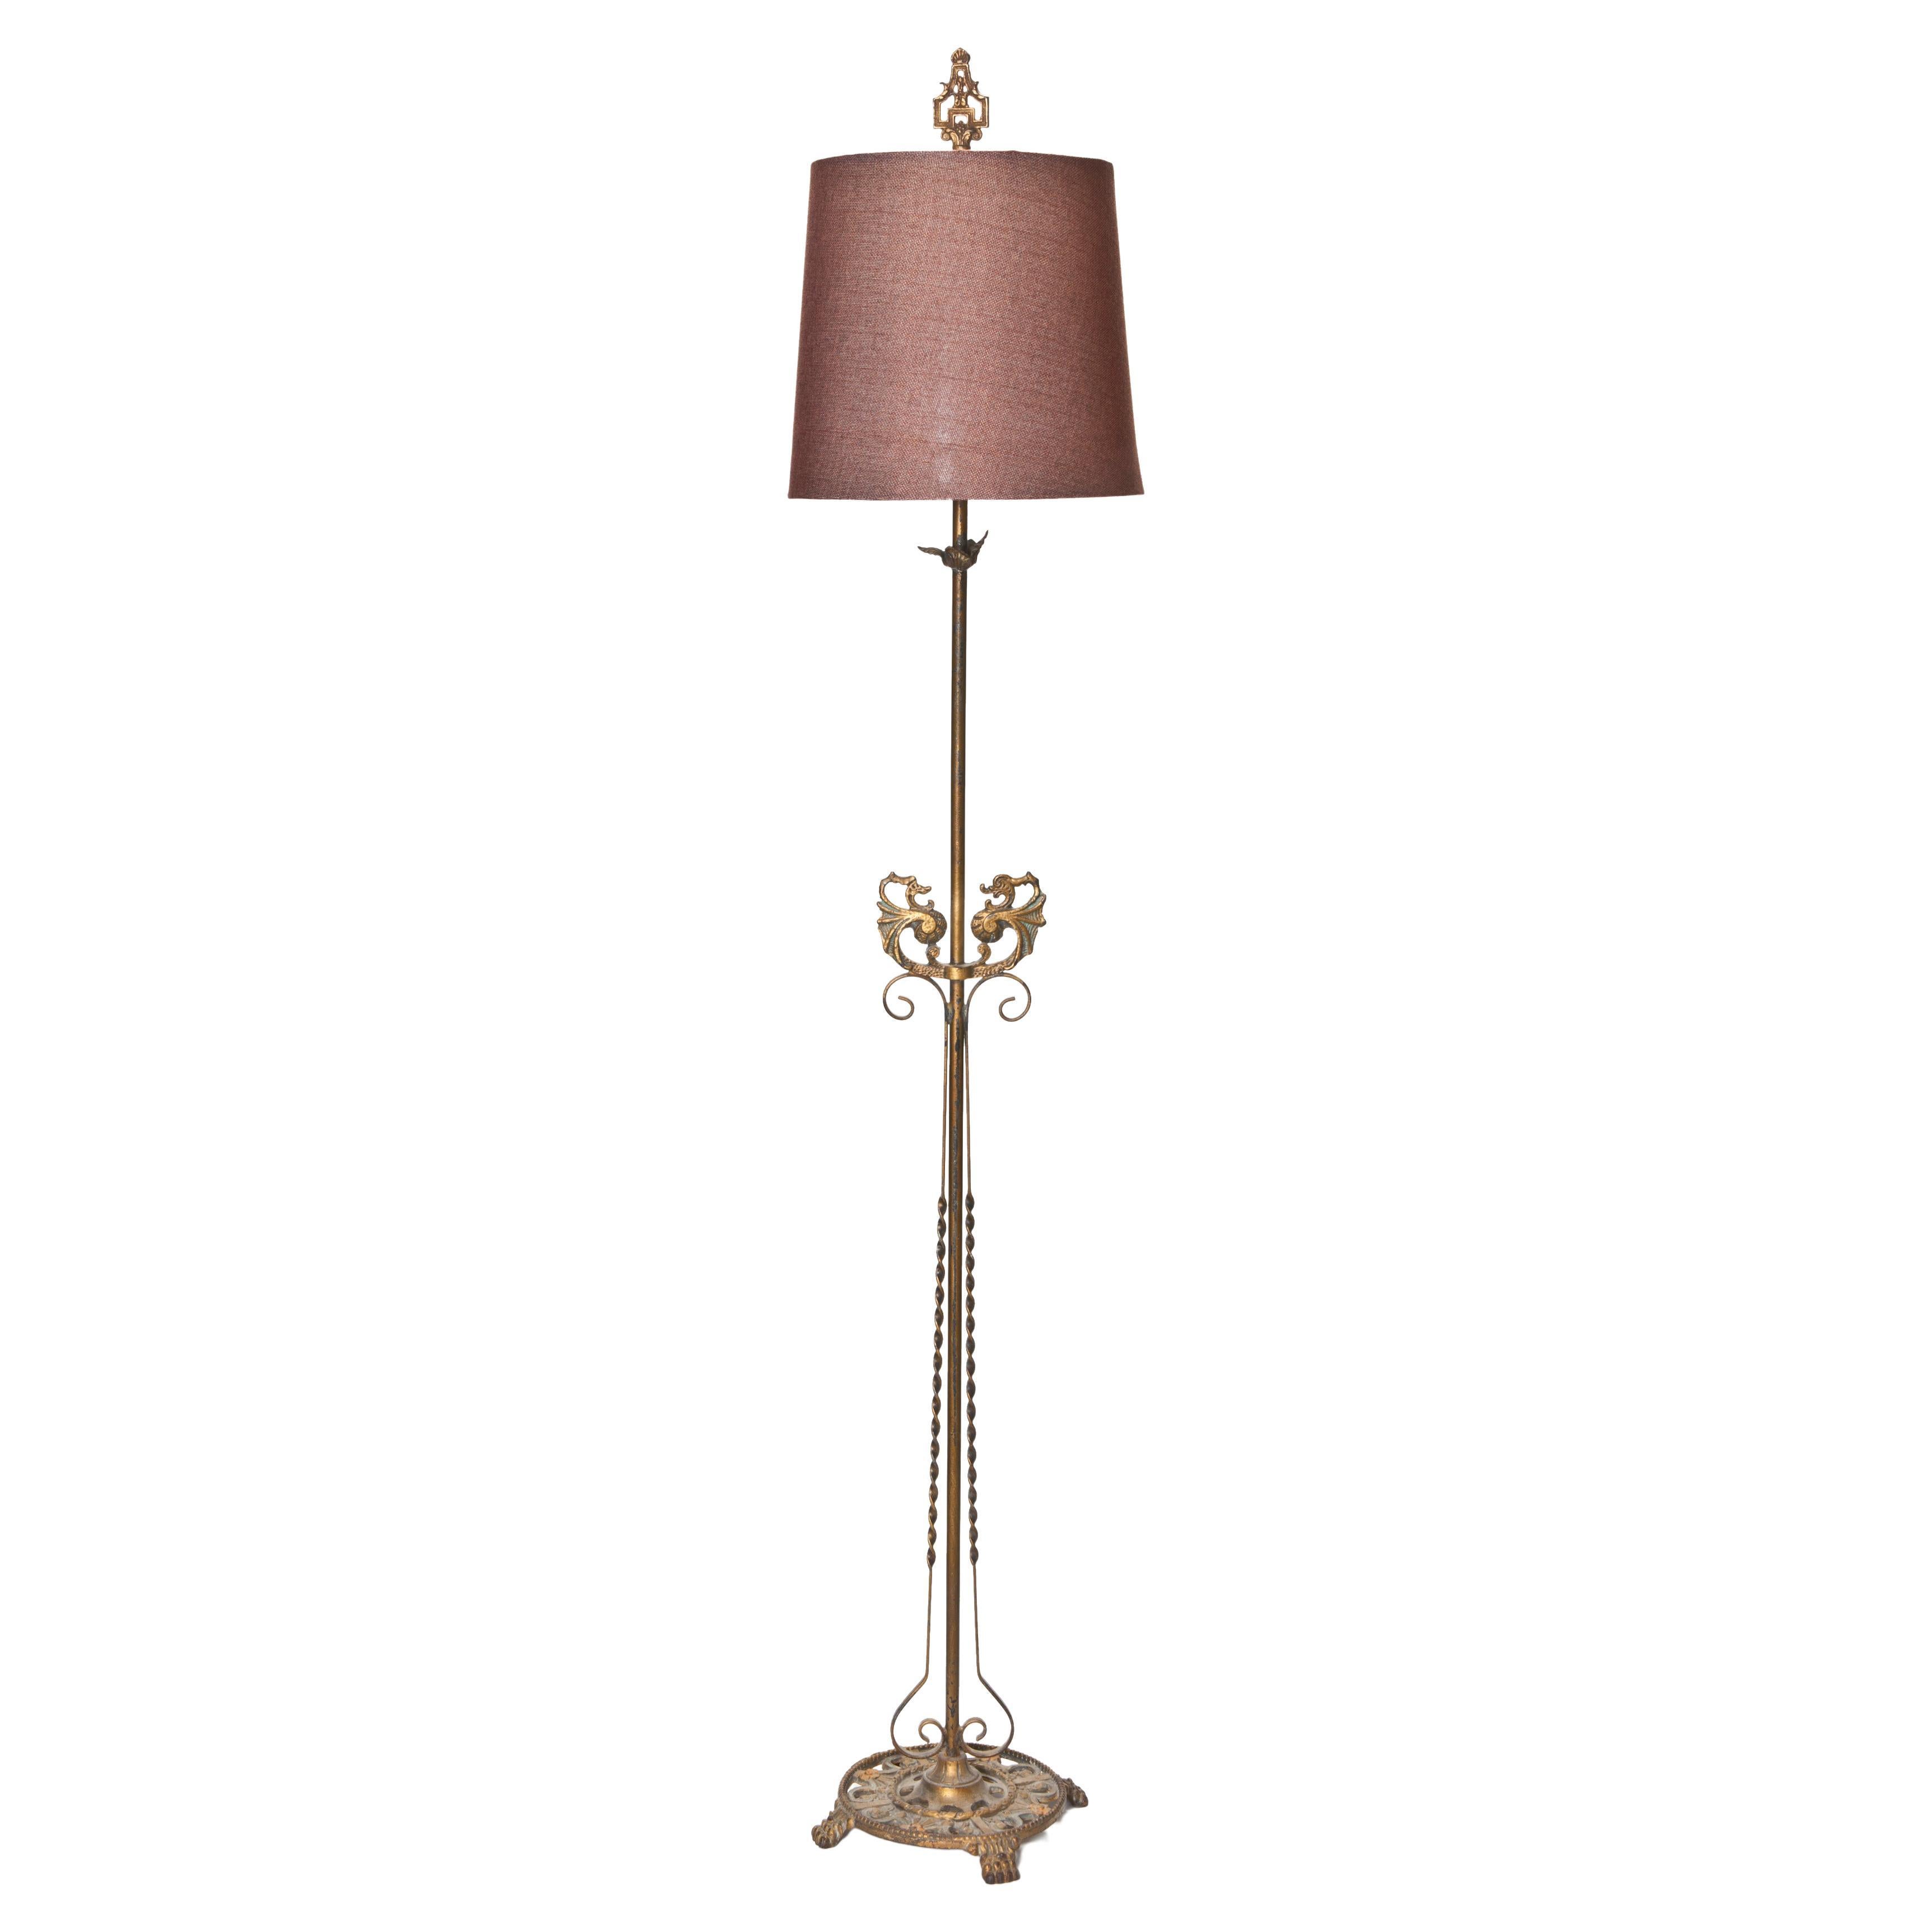 Early Art Deco Iron Floor Lamp